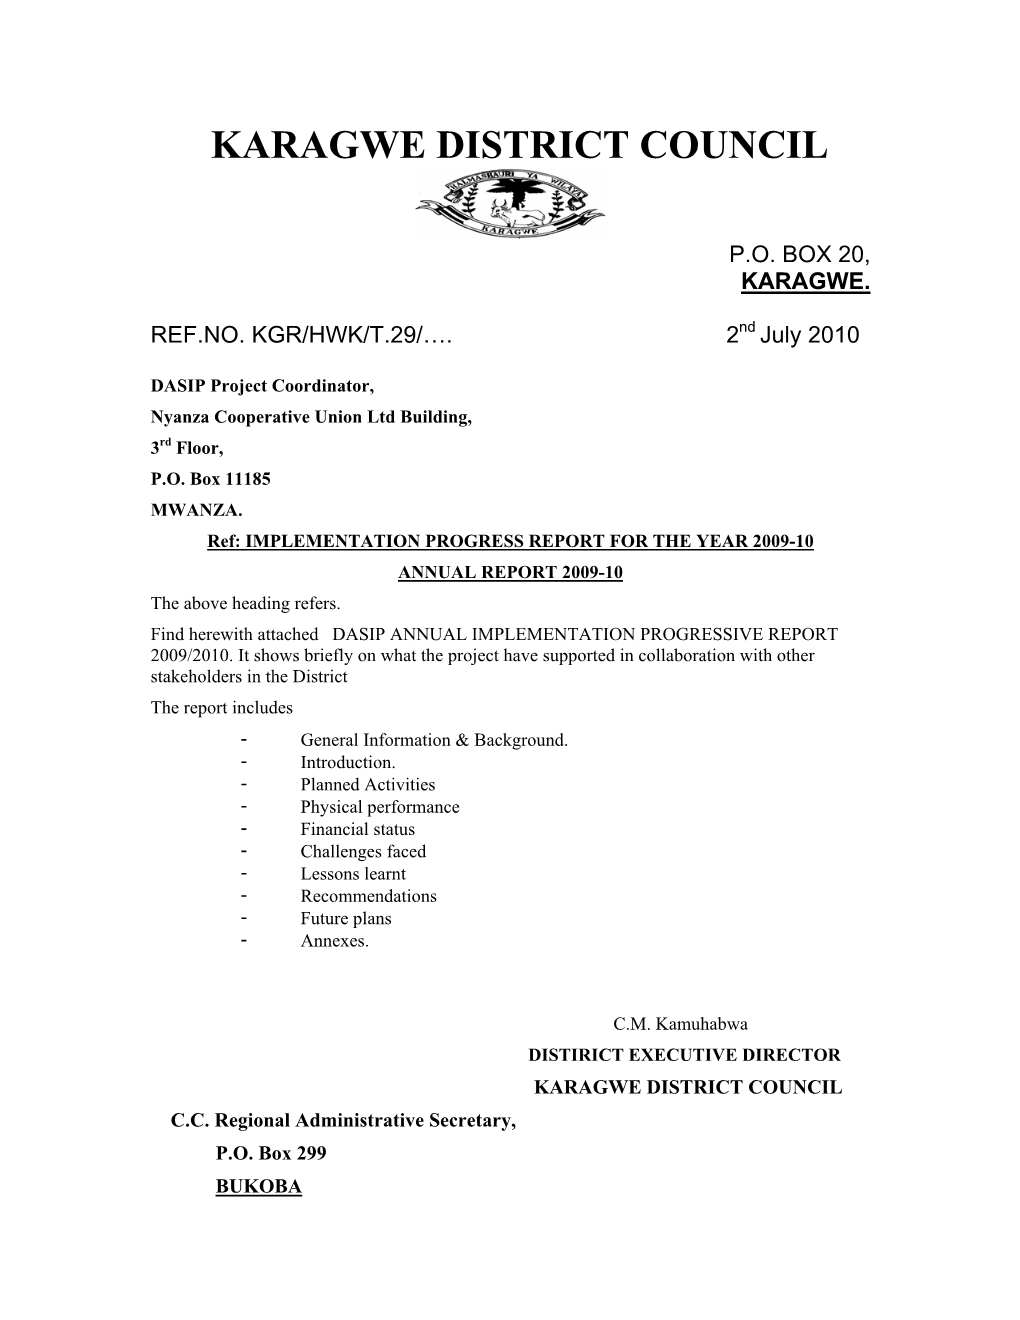 Karagwe District Council